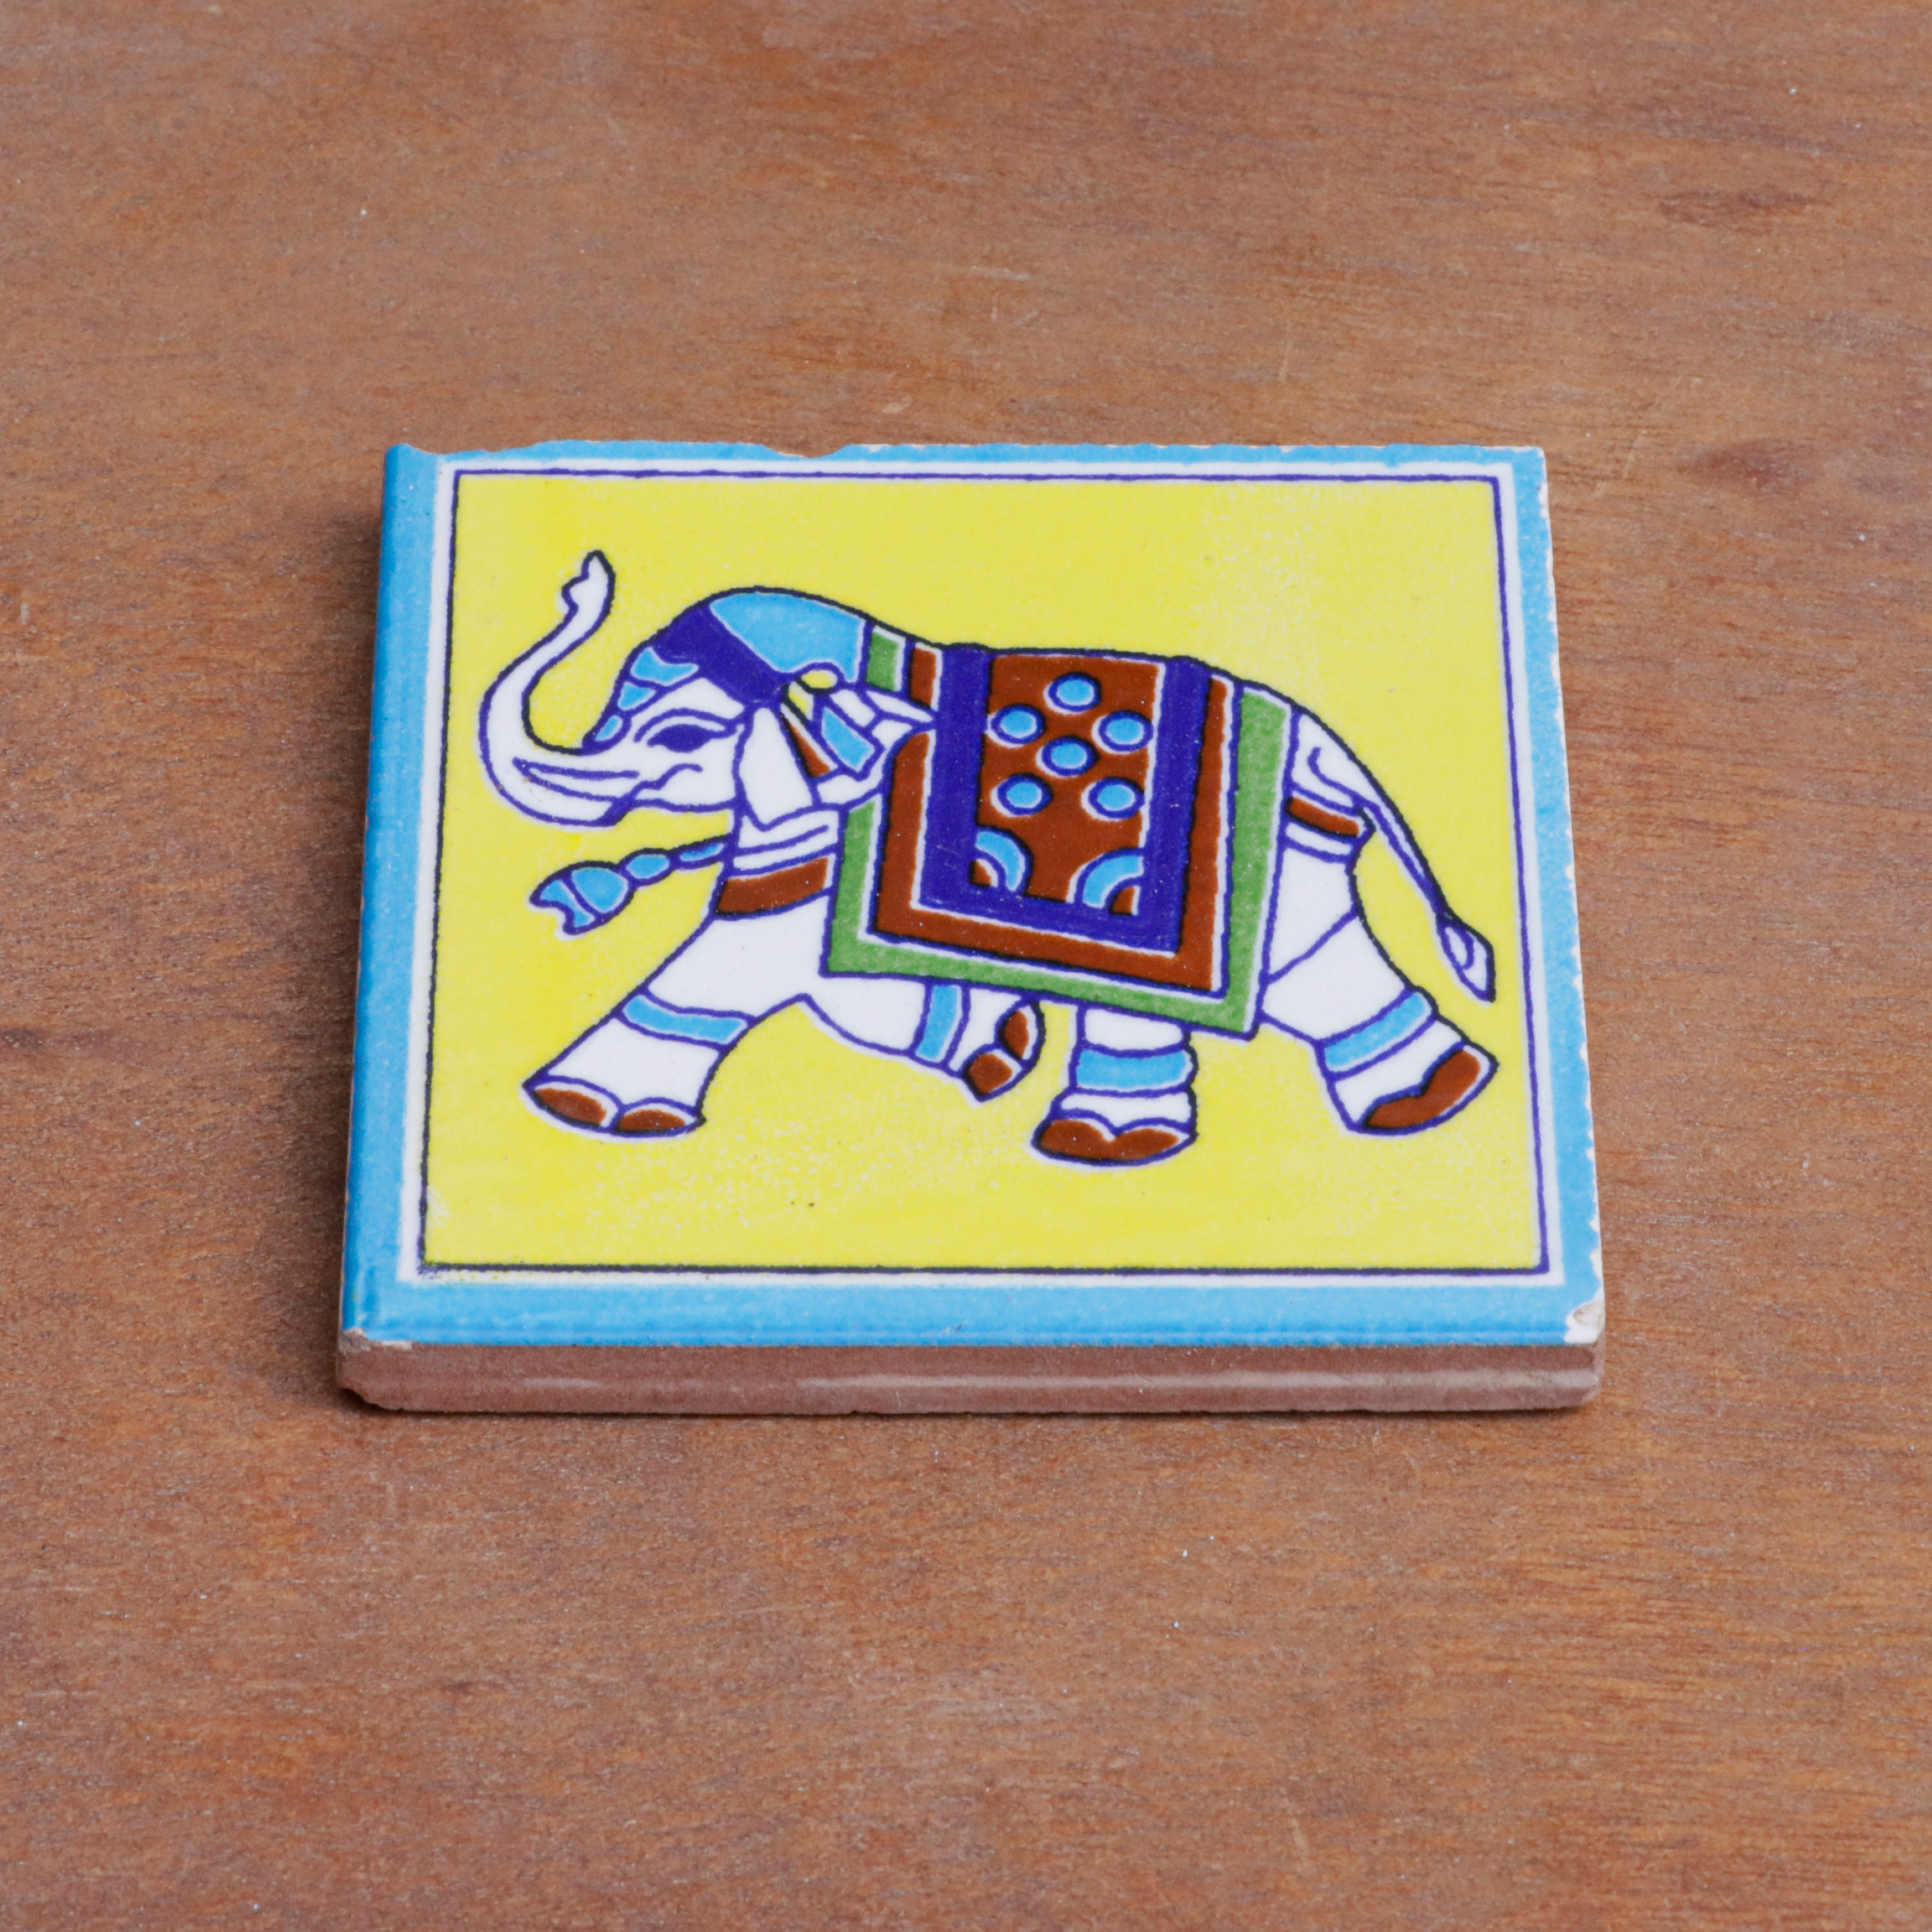 Adorable Antique Elephant Designed Ceramic Square Tile Set of 2 Ceramic Tile